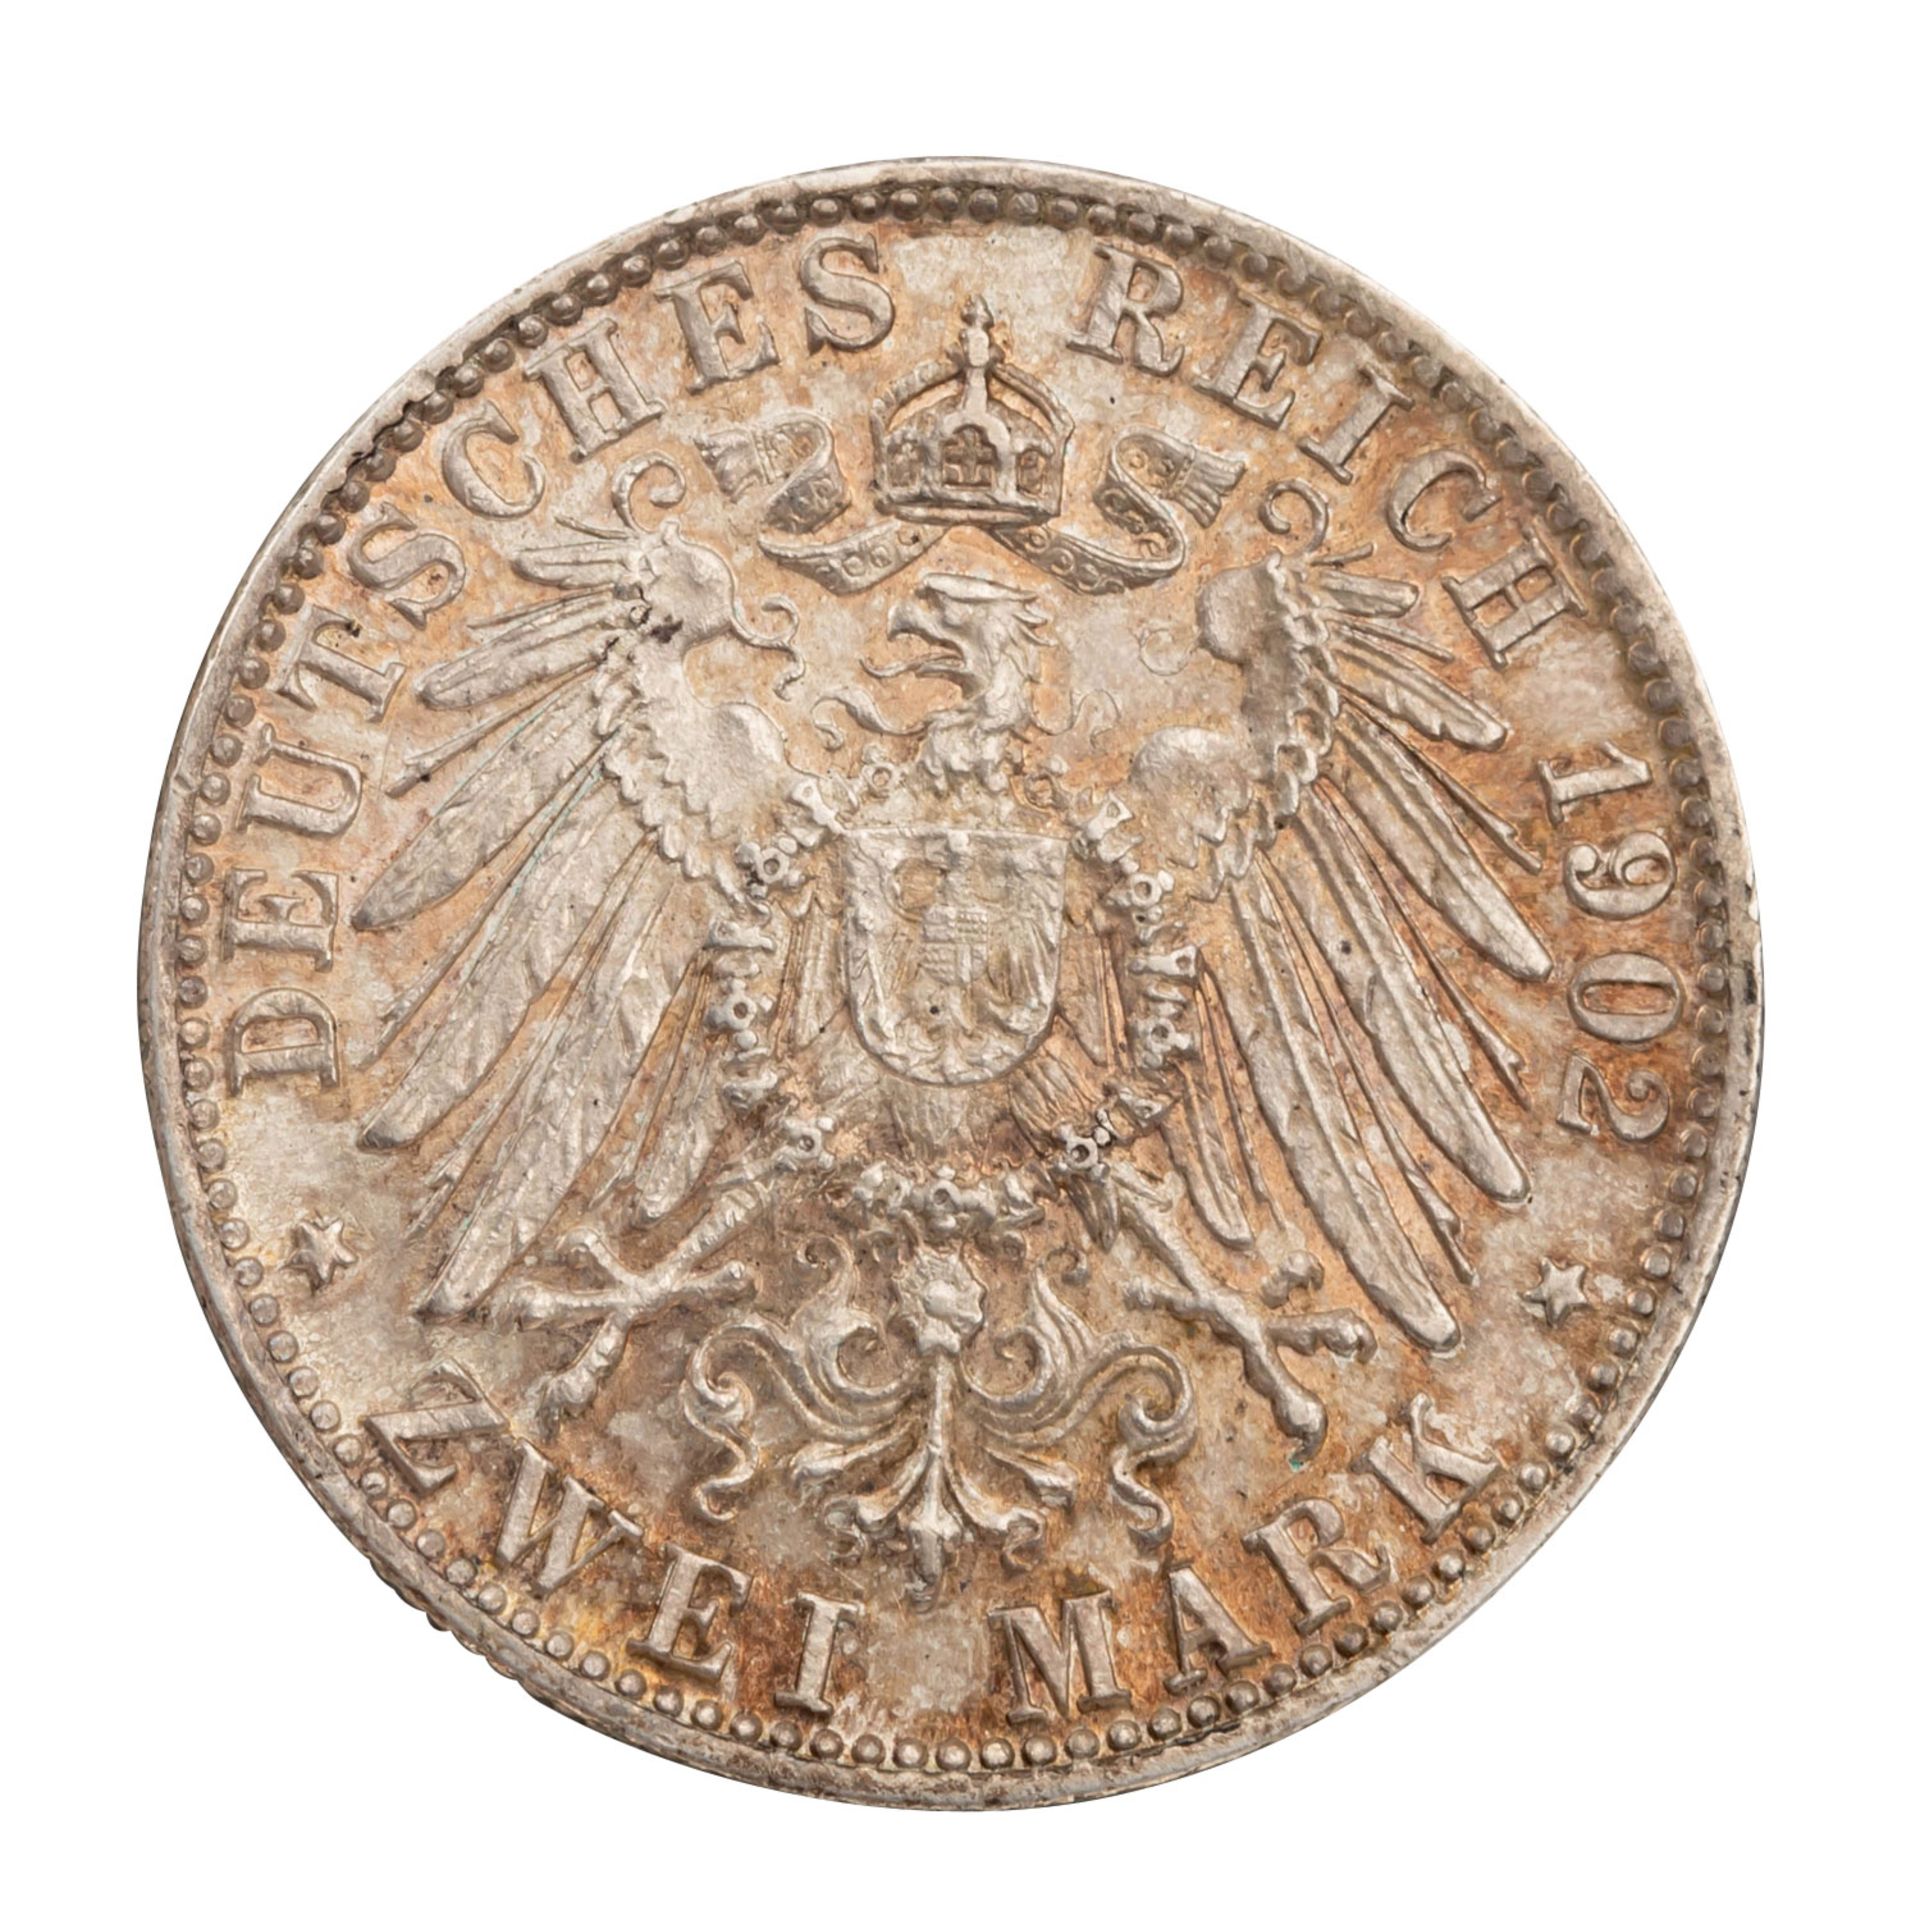 Herzogtum Sachsen-Meiningen/Silber - 2 Mark 1902/D, - Image 2 of 2